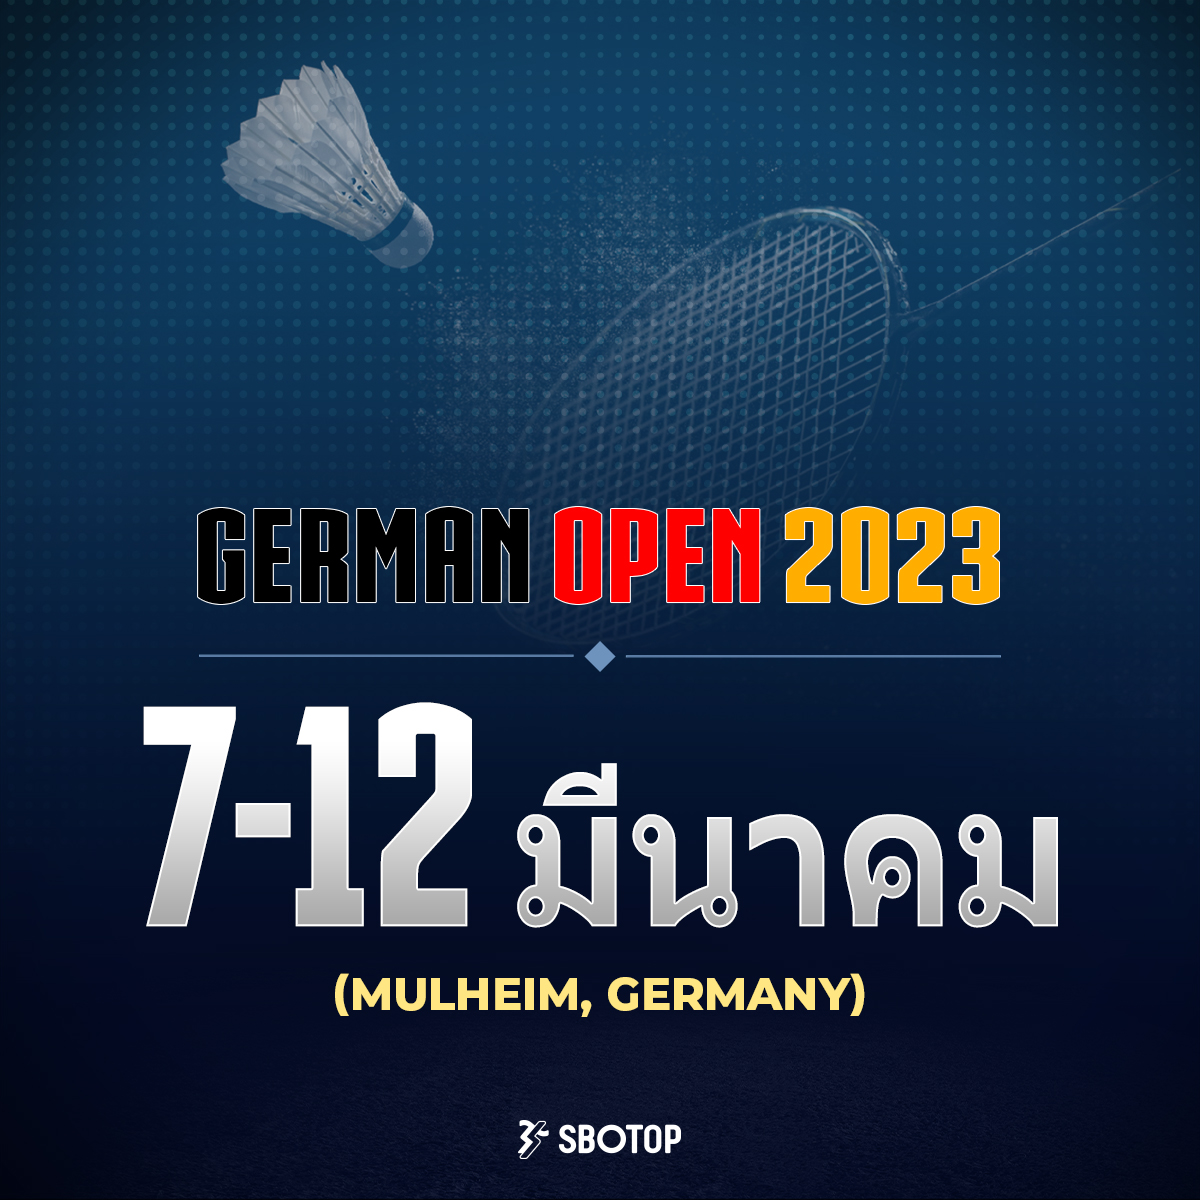 The Badminton World Tour ต่อด้วยรายการ German Open 2023 ใกล้เข้ามาแล้ว 🏸

🇹🇭 จะเป็นจุดสนใจหรือไม่?

#HSBCbadminton #BWFWorldTour 
#GermanOpen2023